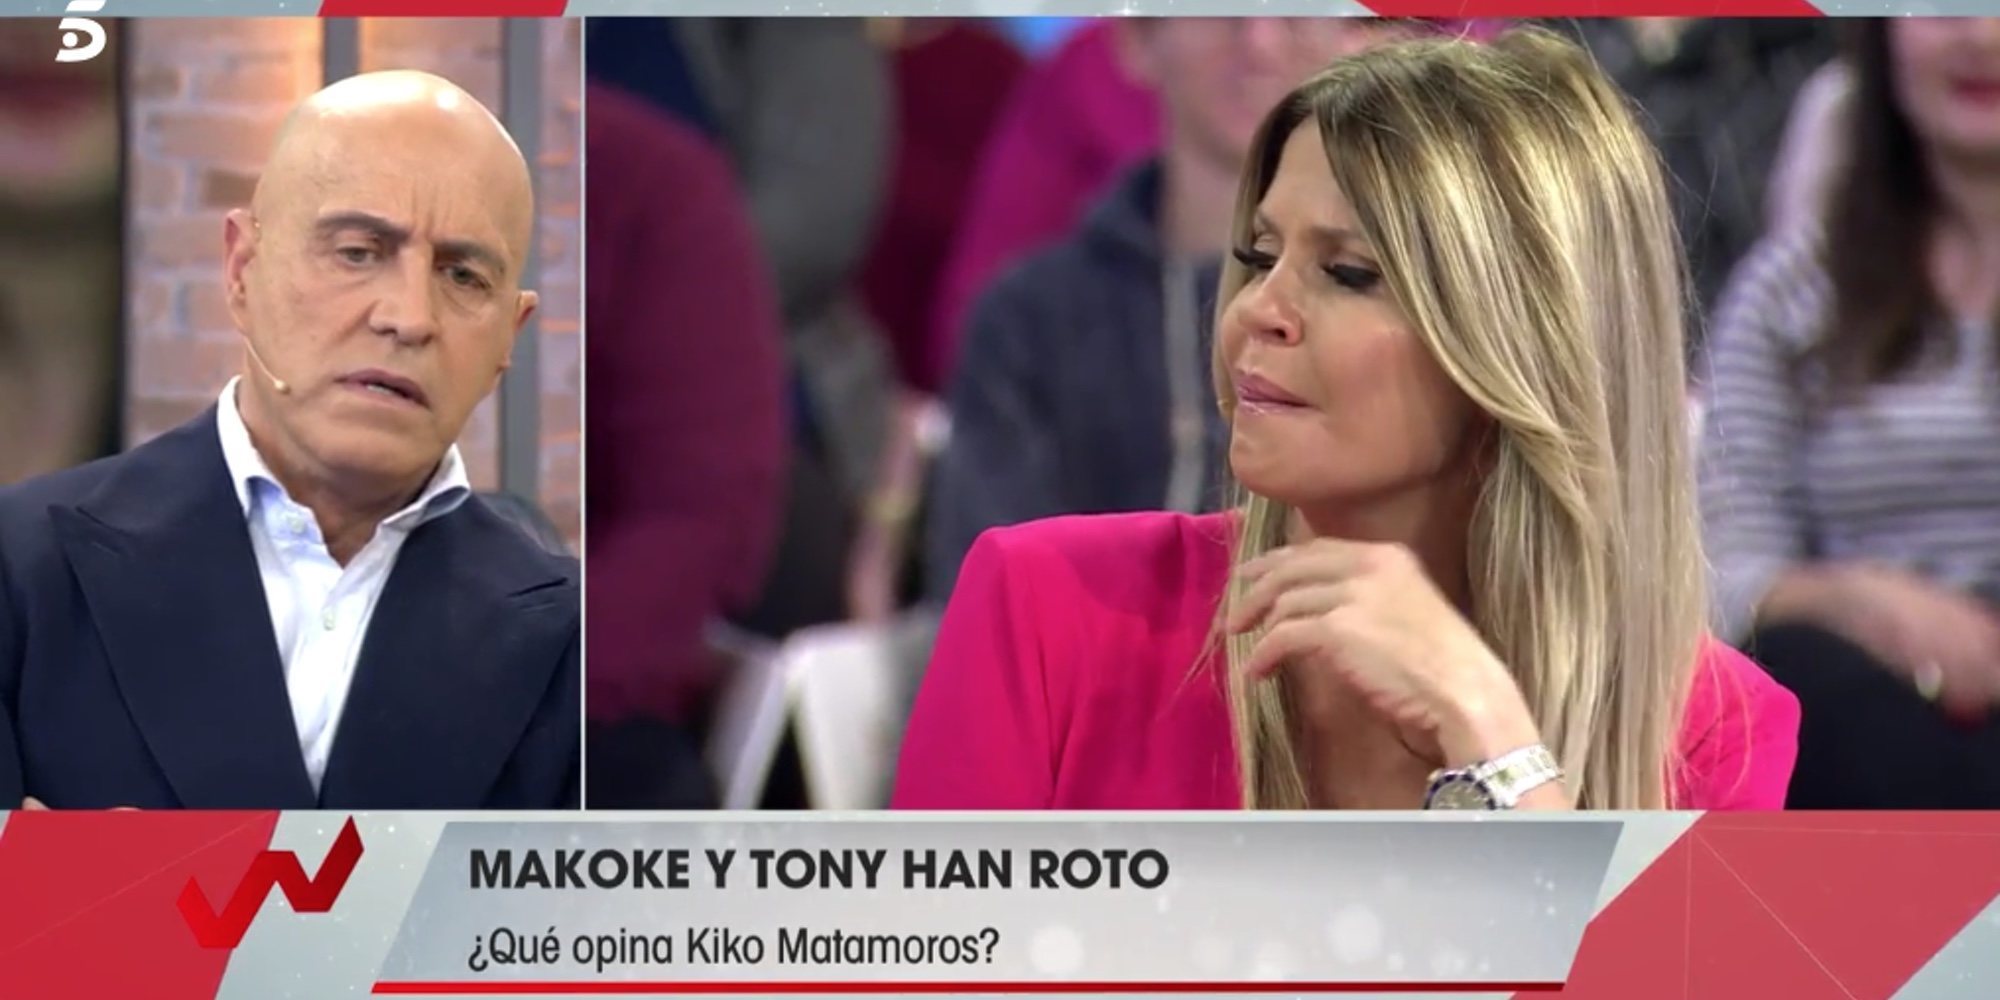 Kiko Matamoros reacciona a la ruptura de Makoke con Tony Spina: "No me sorprende"